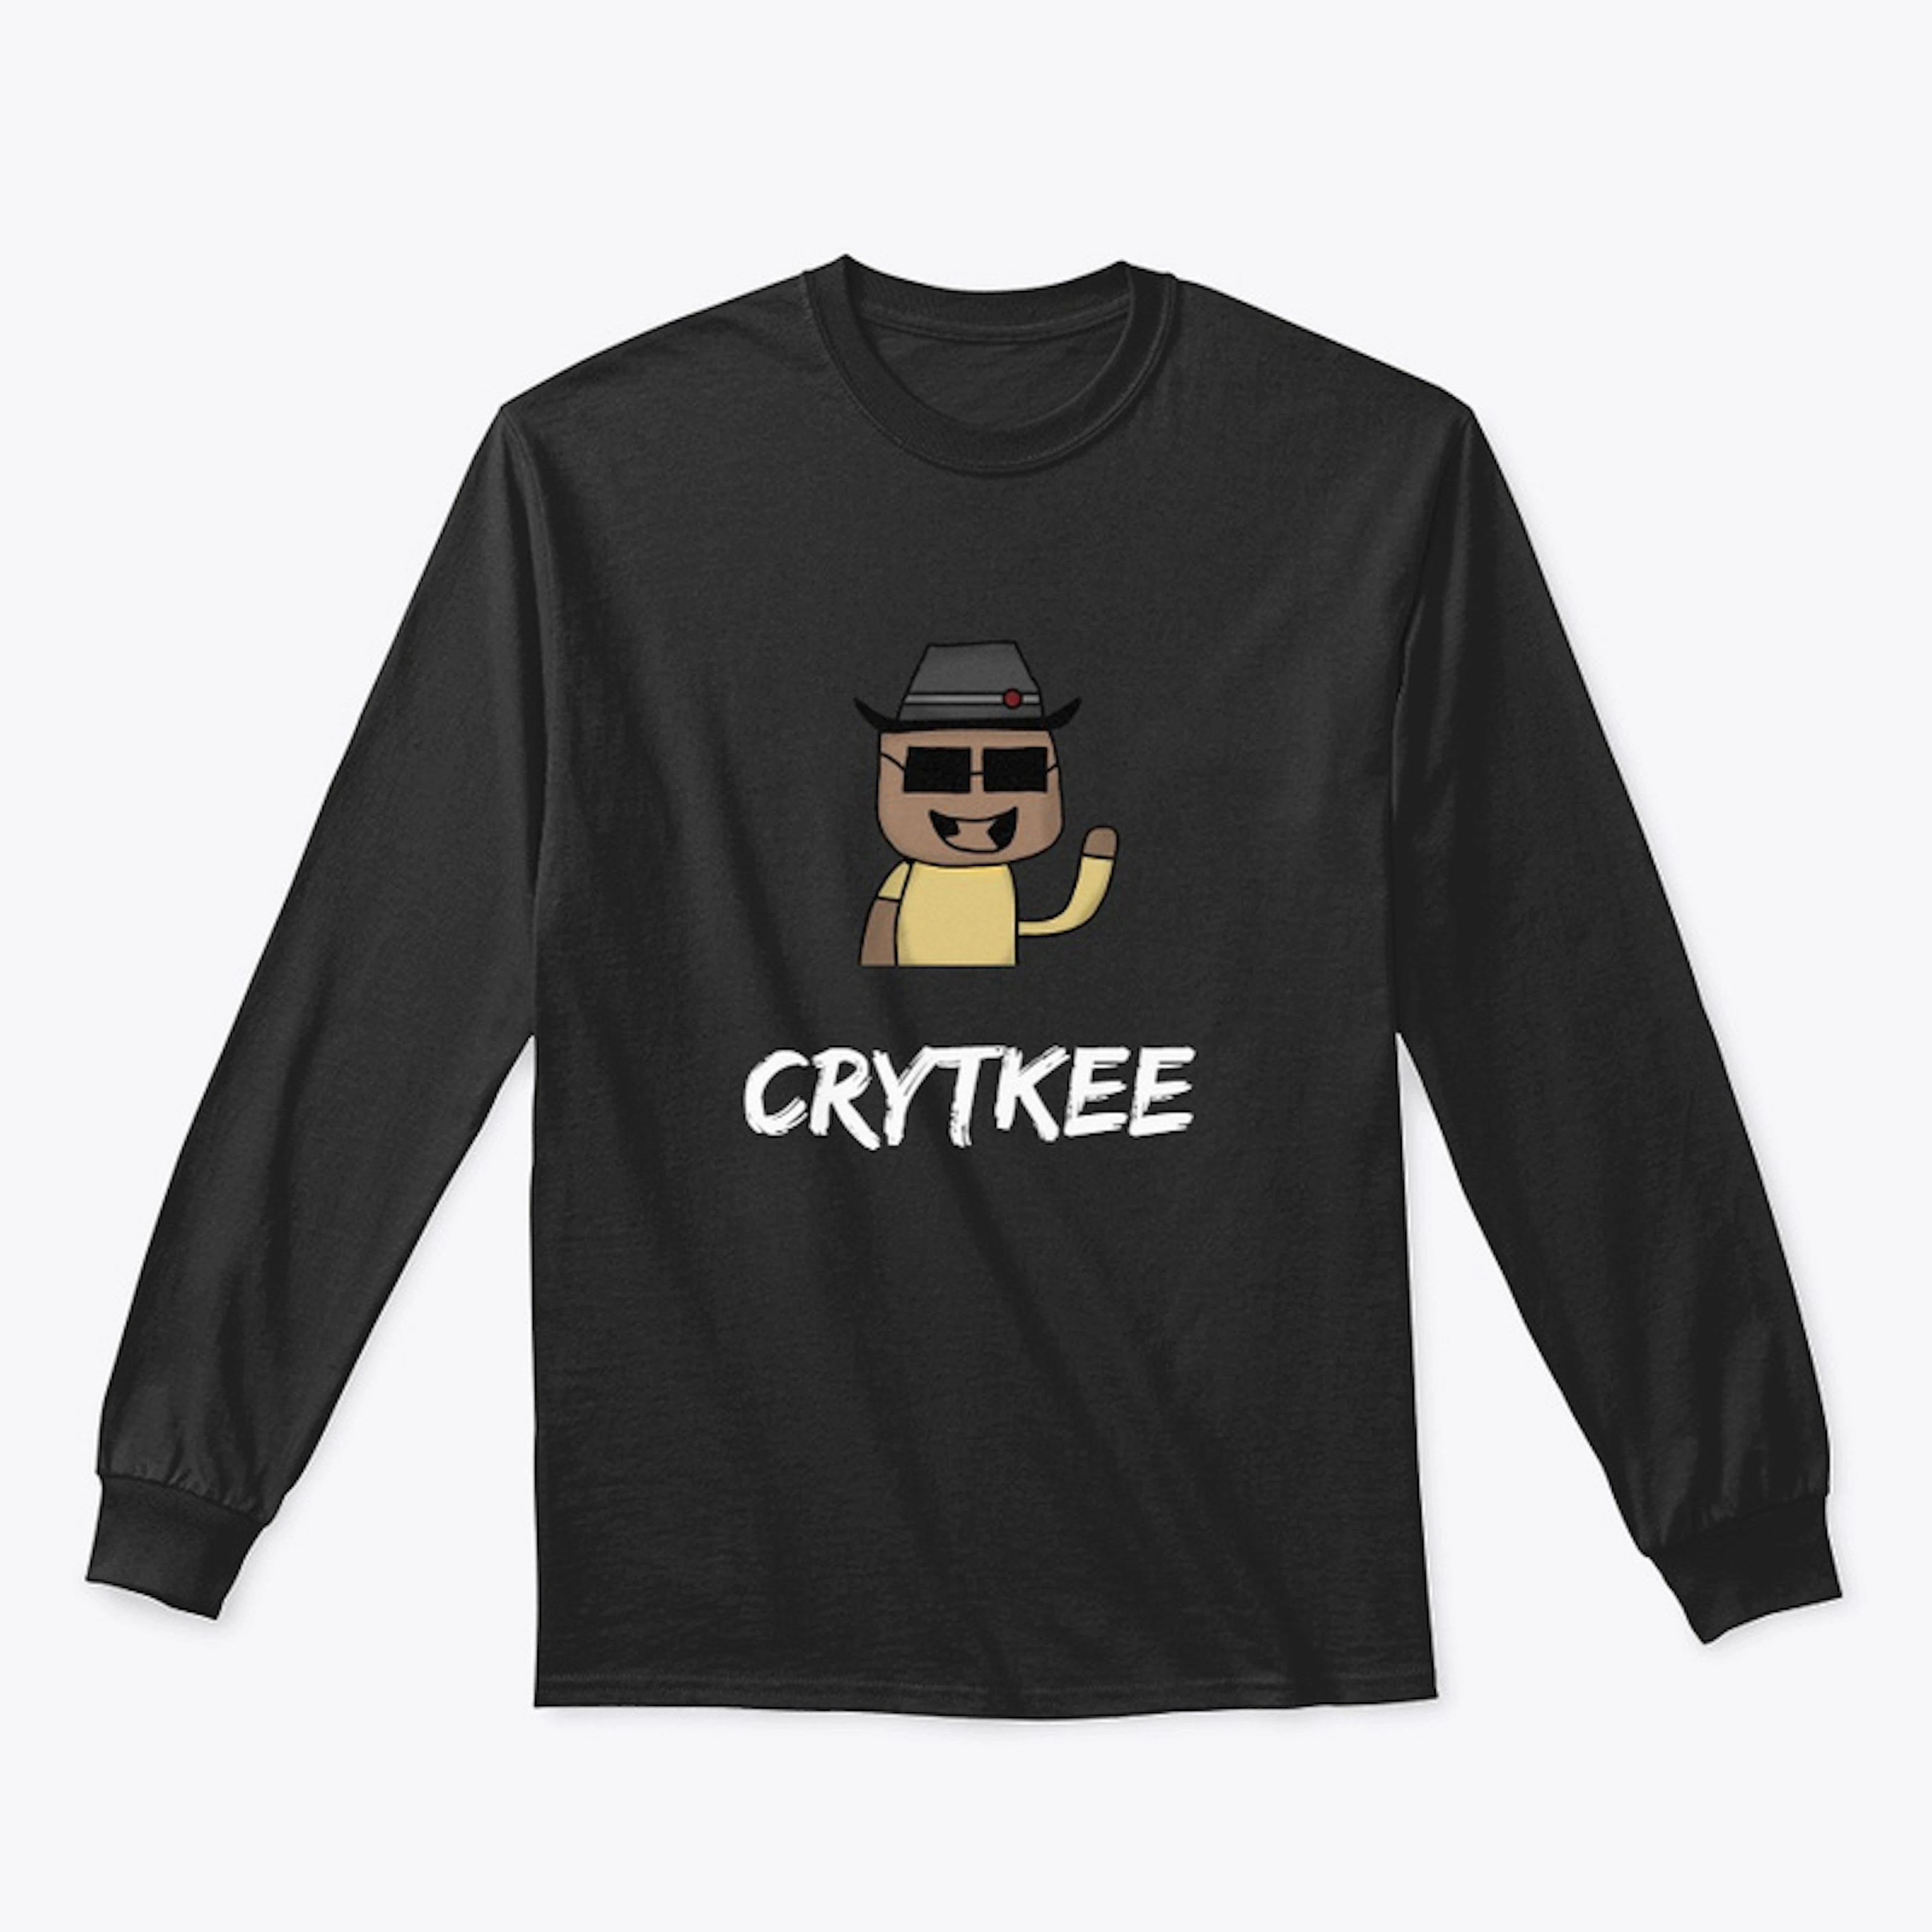 Crytkee's Cool Longsleeve Shirt